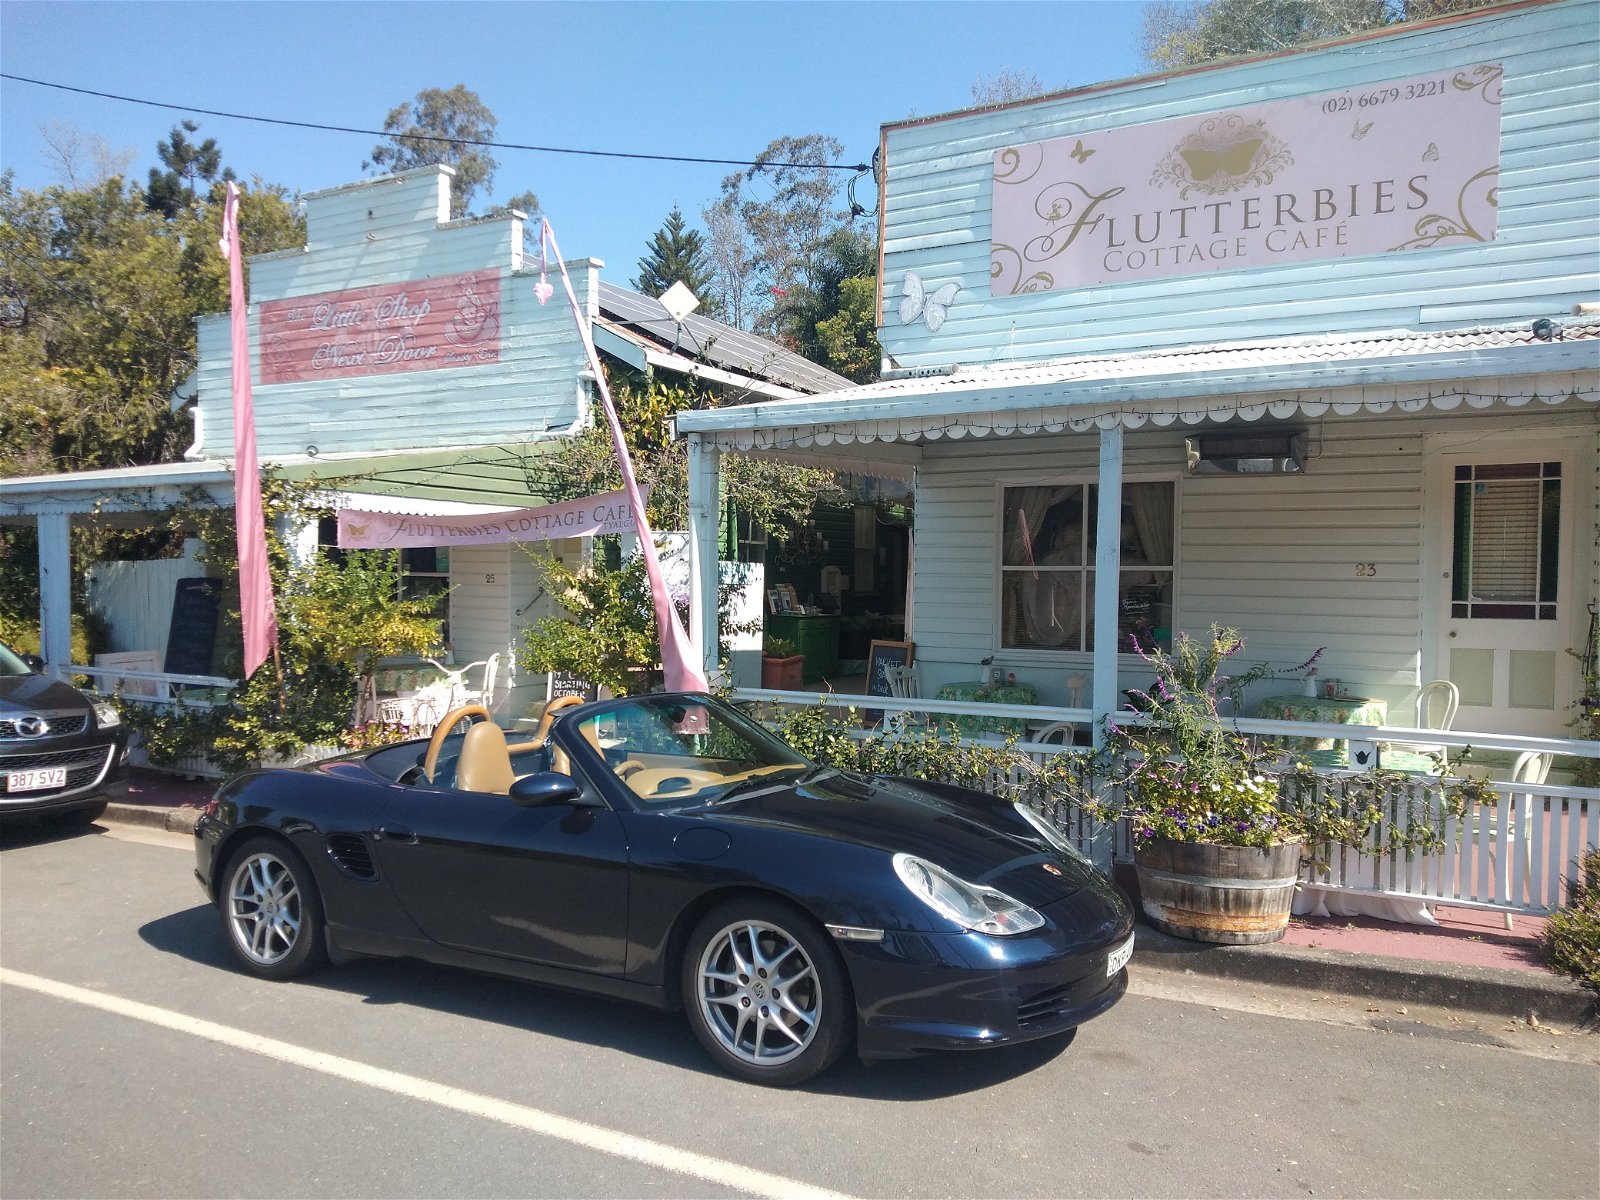 Flutterbies Cottage Cafe - Great Ocean Road Tourism